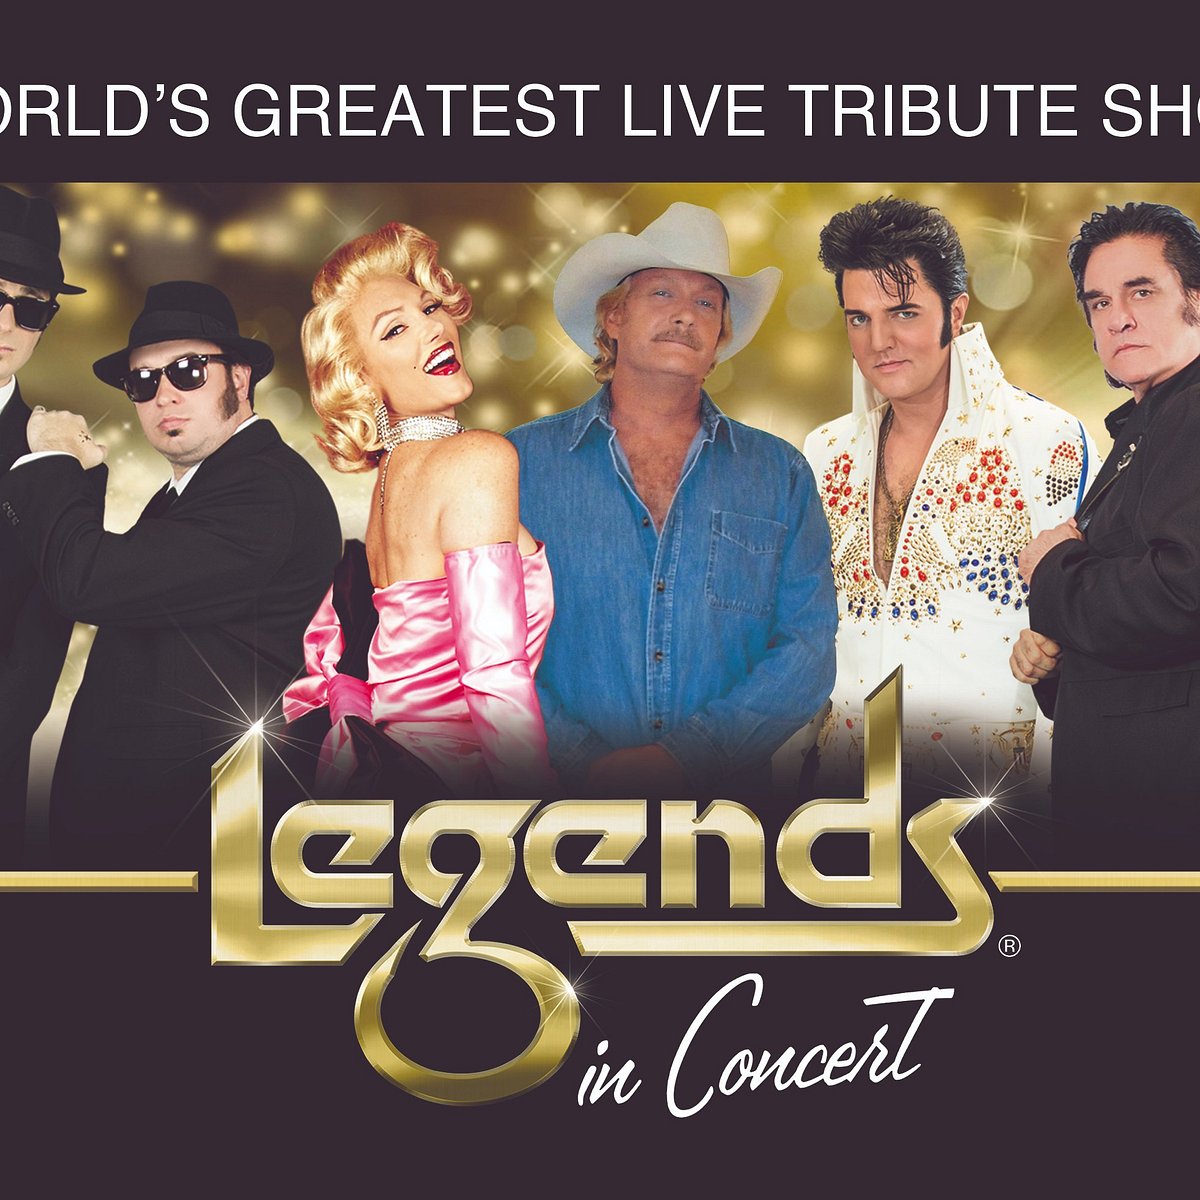 legends in concert tour